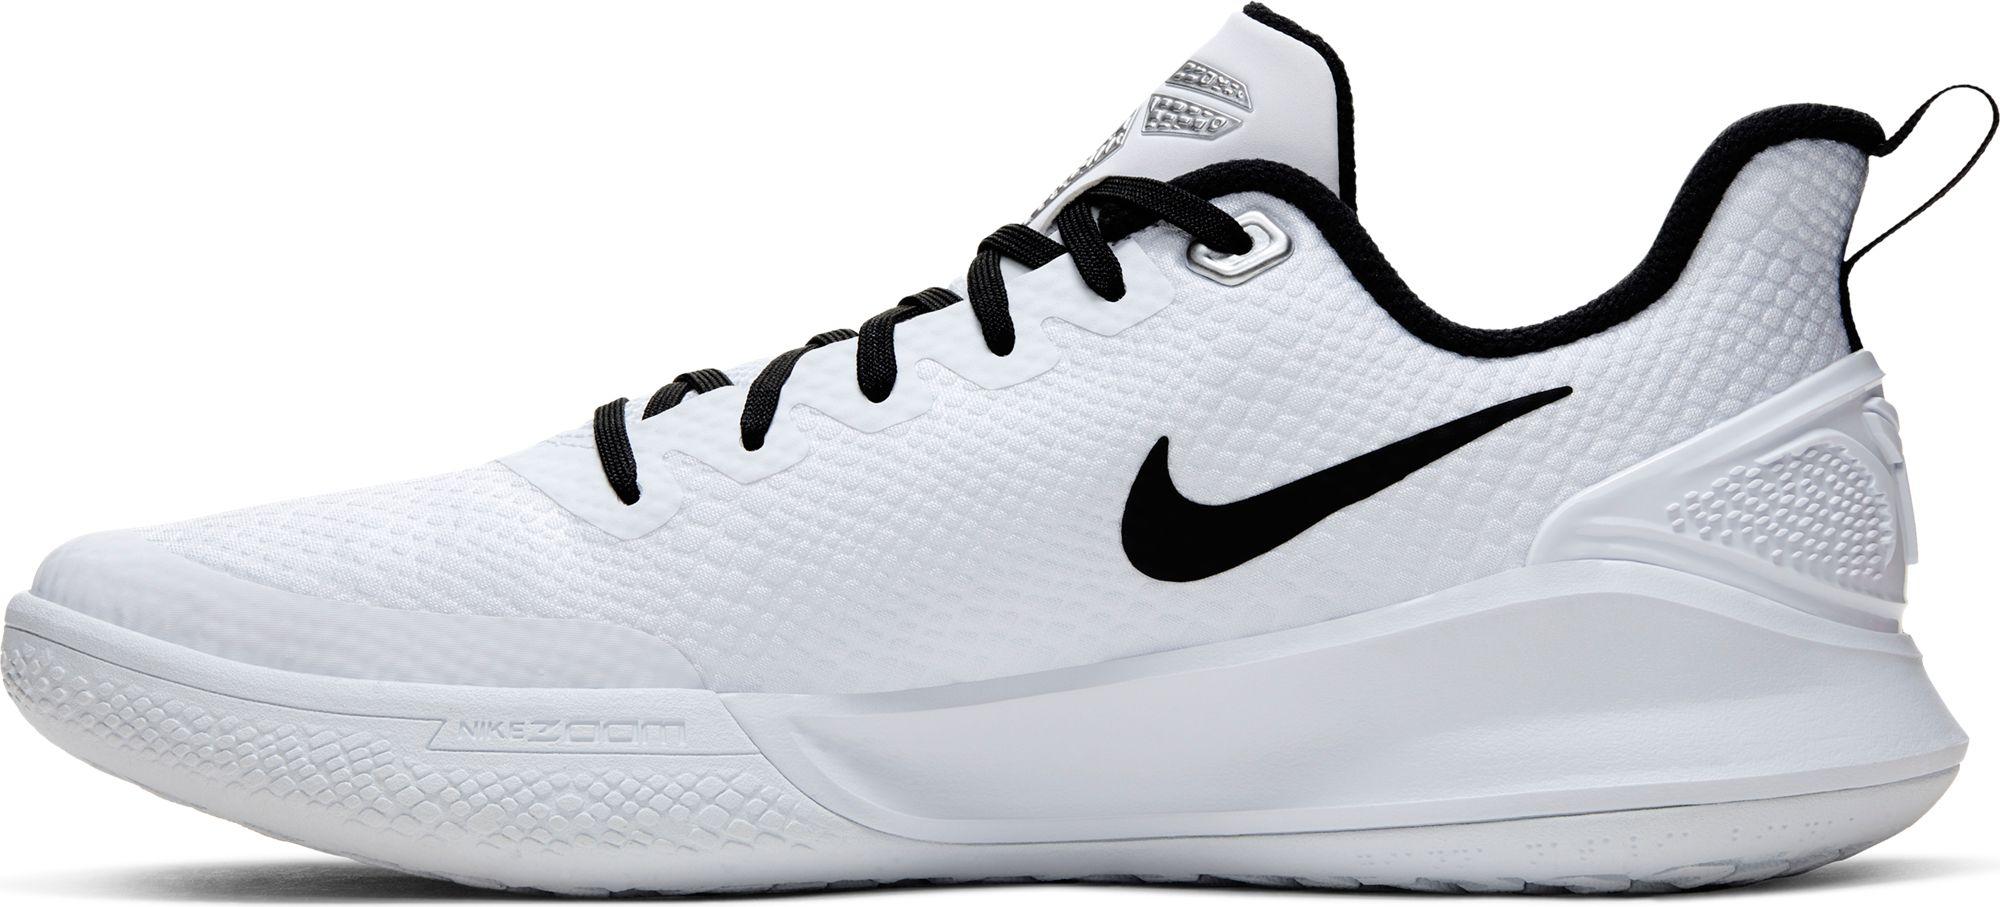 Nike Kobe Mamba Focus Basketball Shoes for Men - Lyst